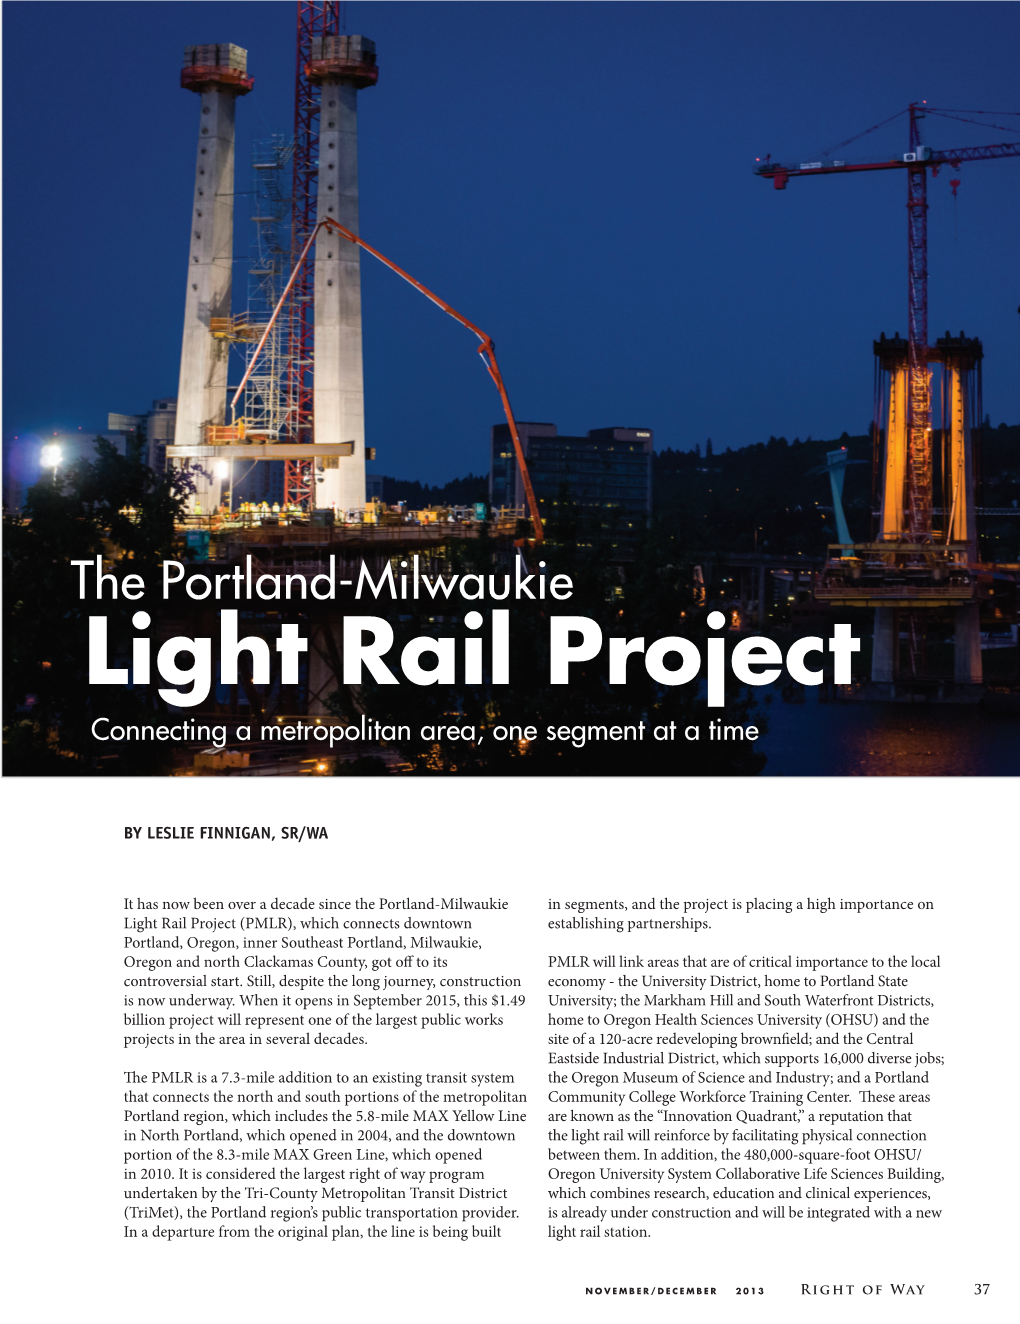 The Portland Milwaukie Light Rail Project